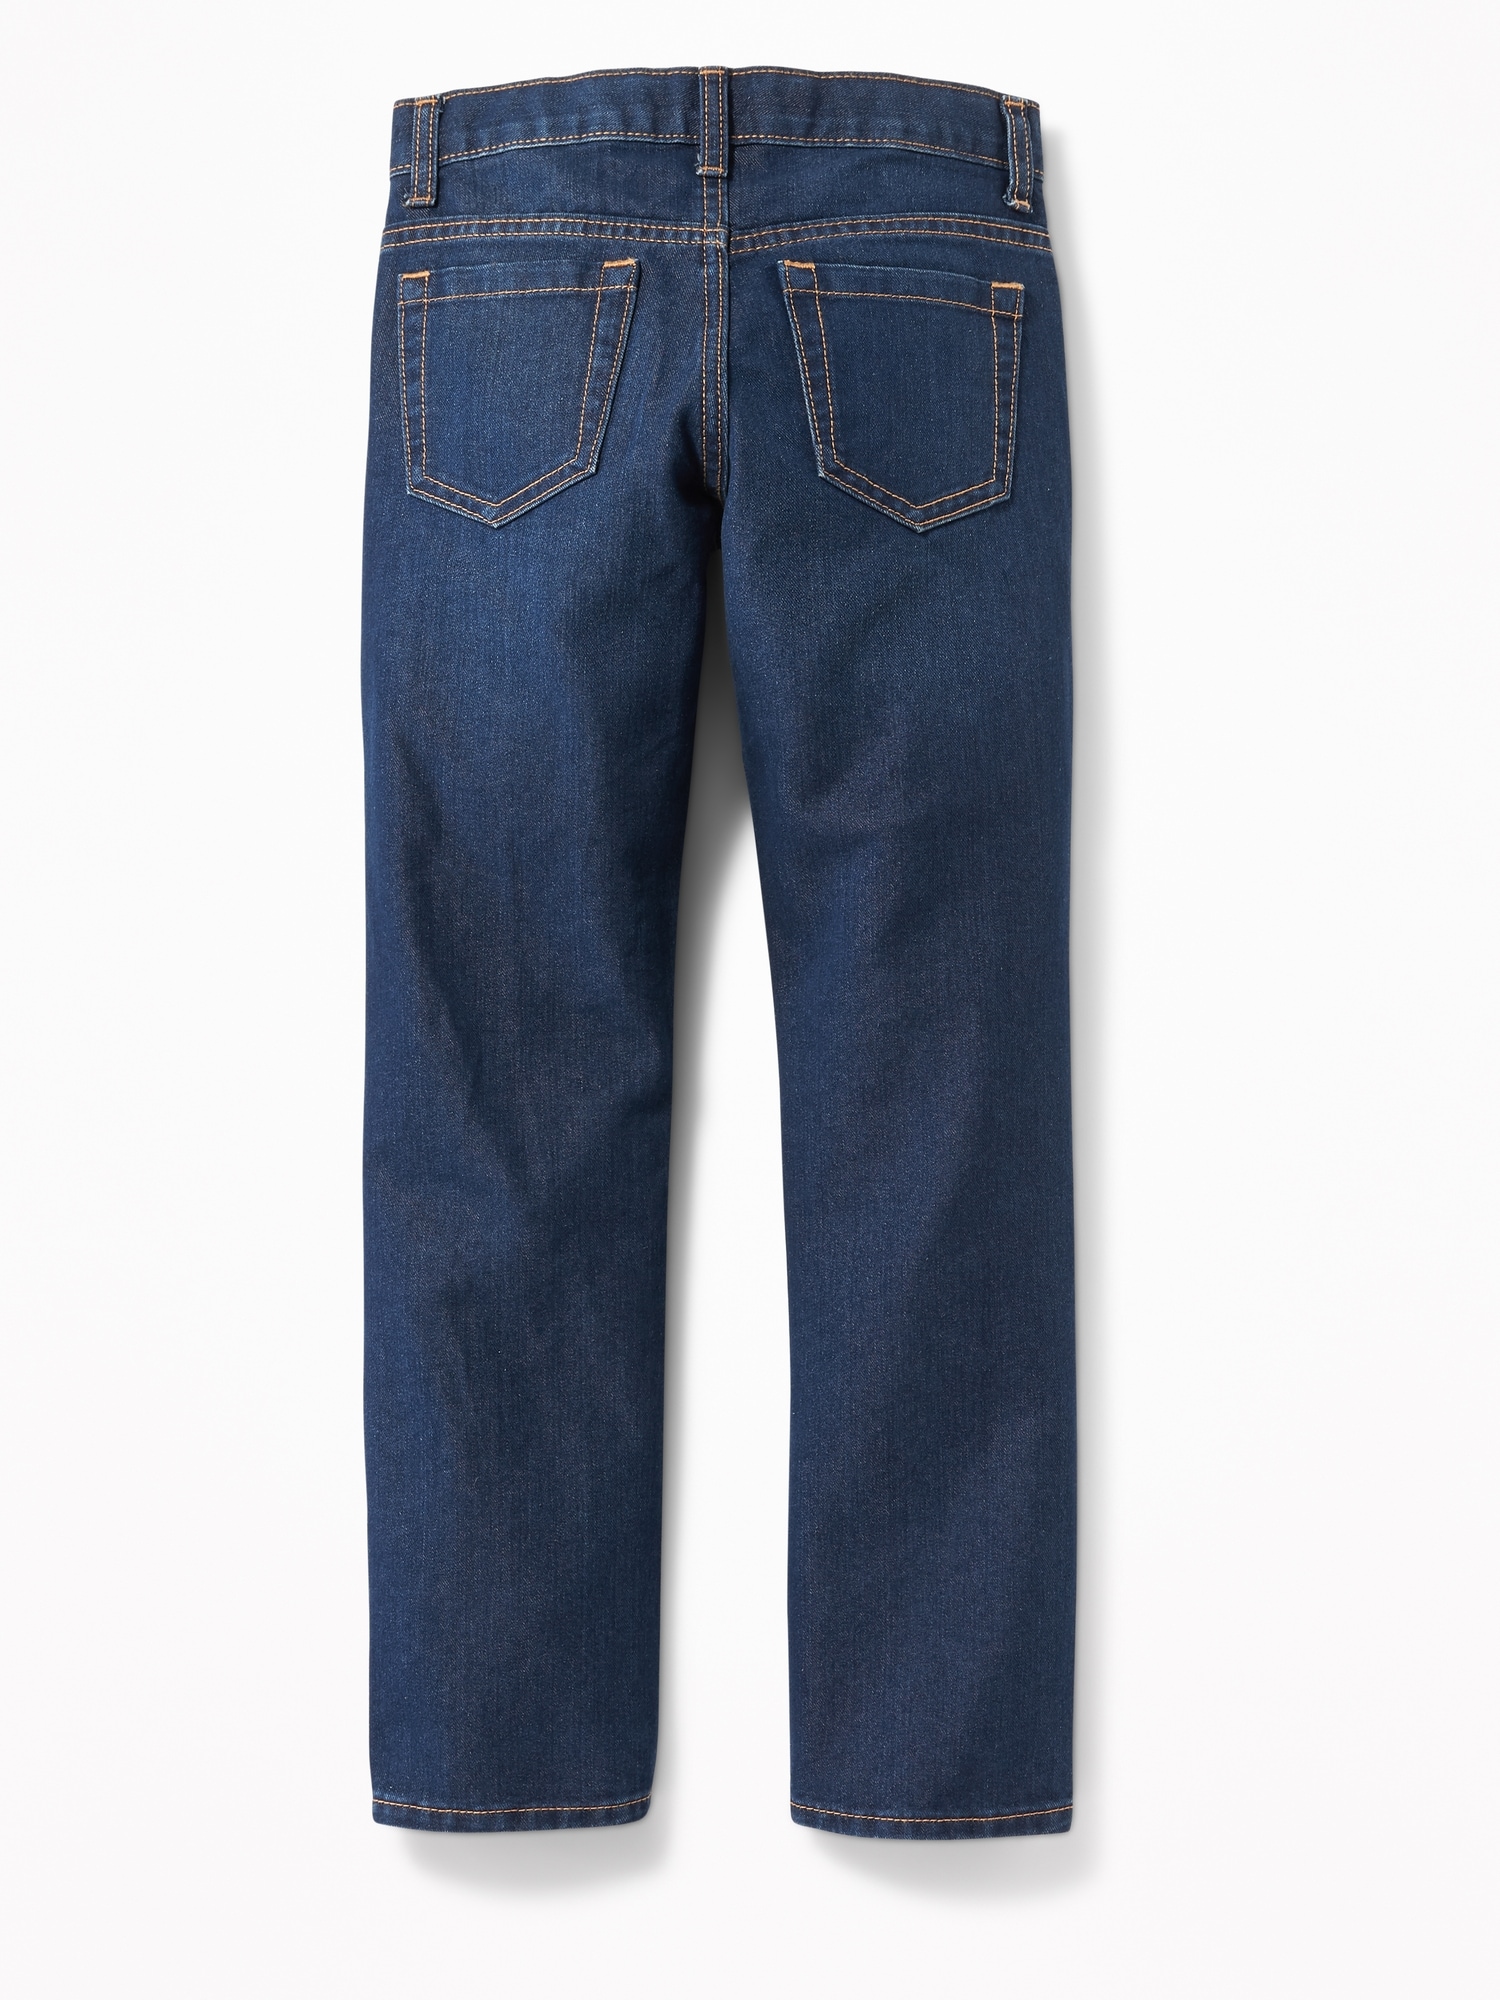 old navy slim stretch jeans